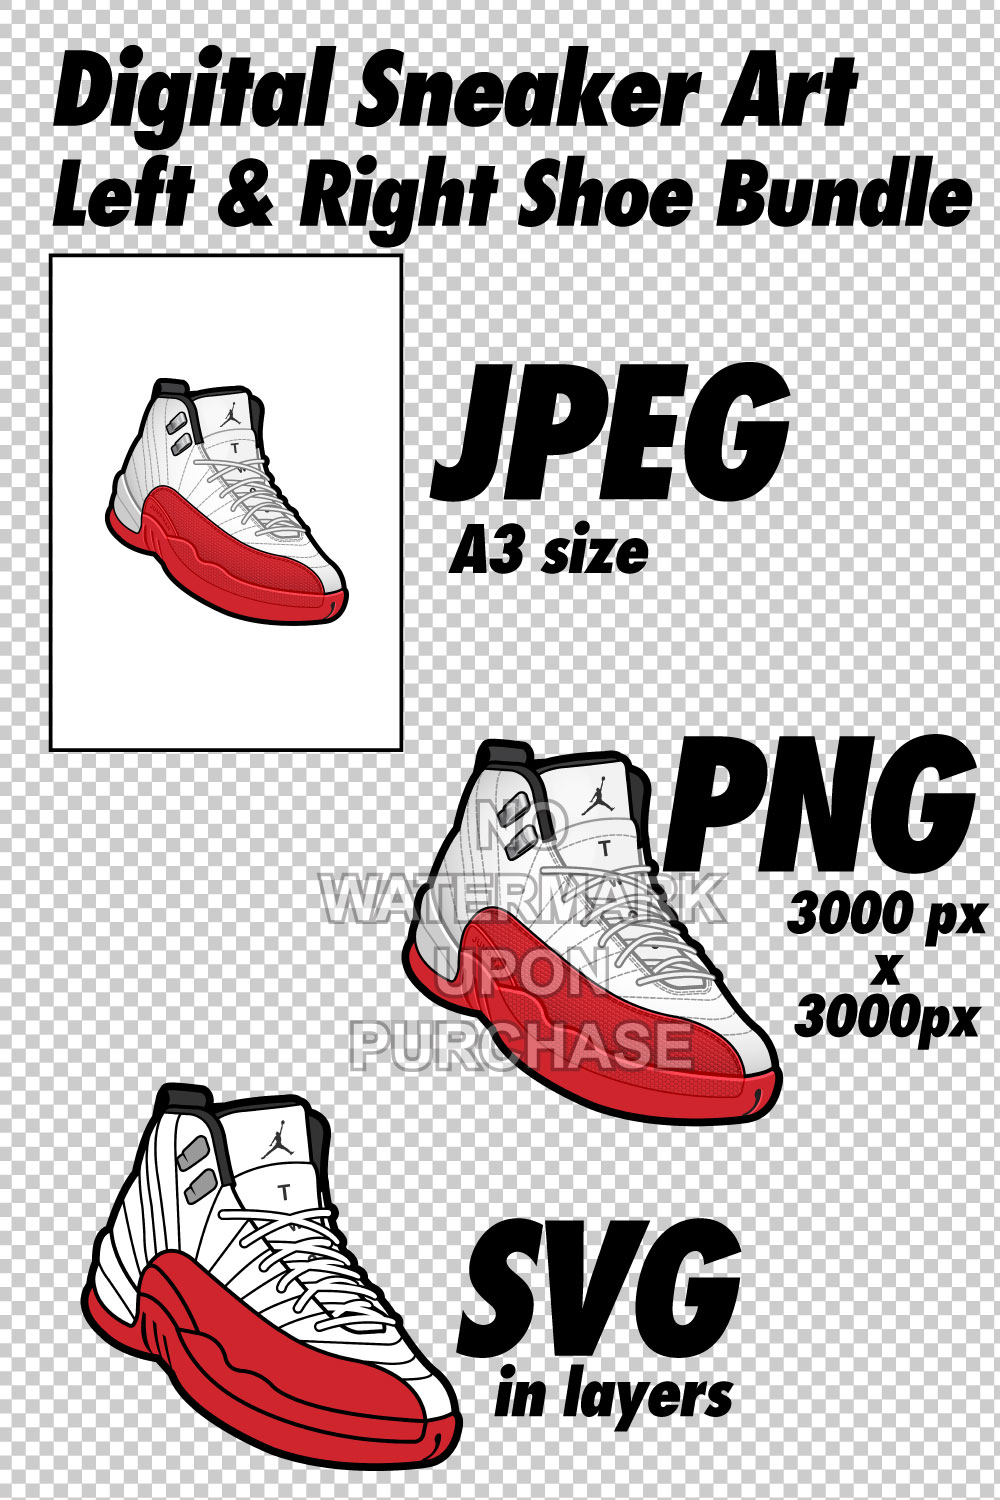 Air Jordan 12 Cherry JPEG PNG SVG Sneaker Art Right & Left shoe bundle with lace swap Digital Download pinterest preview image.